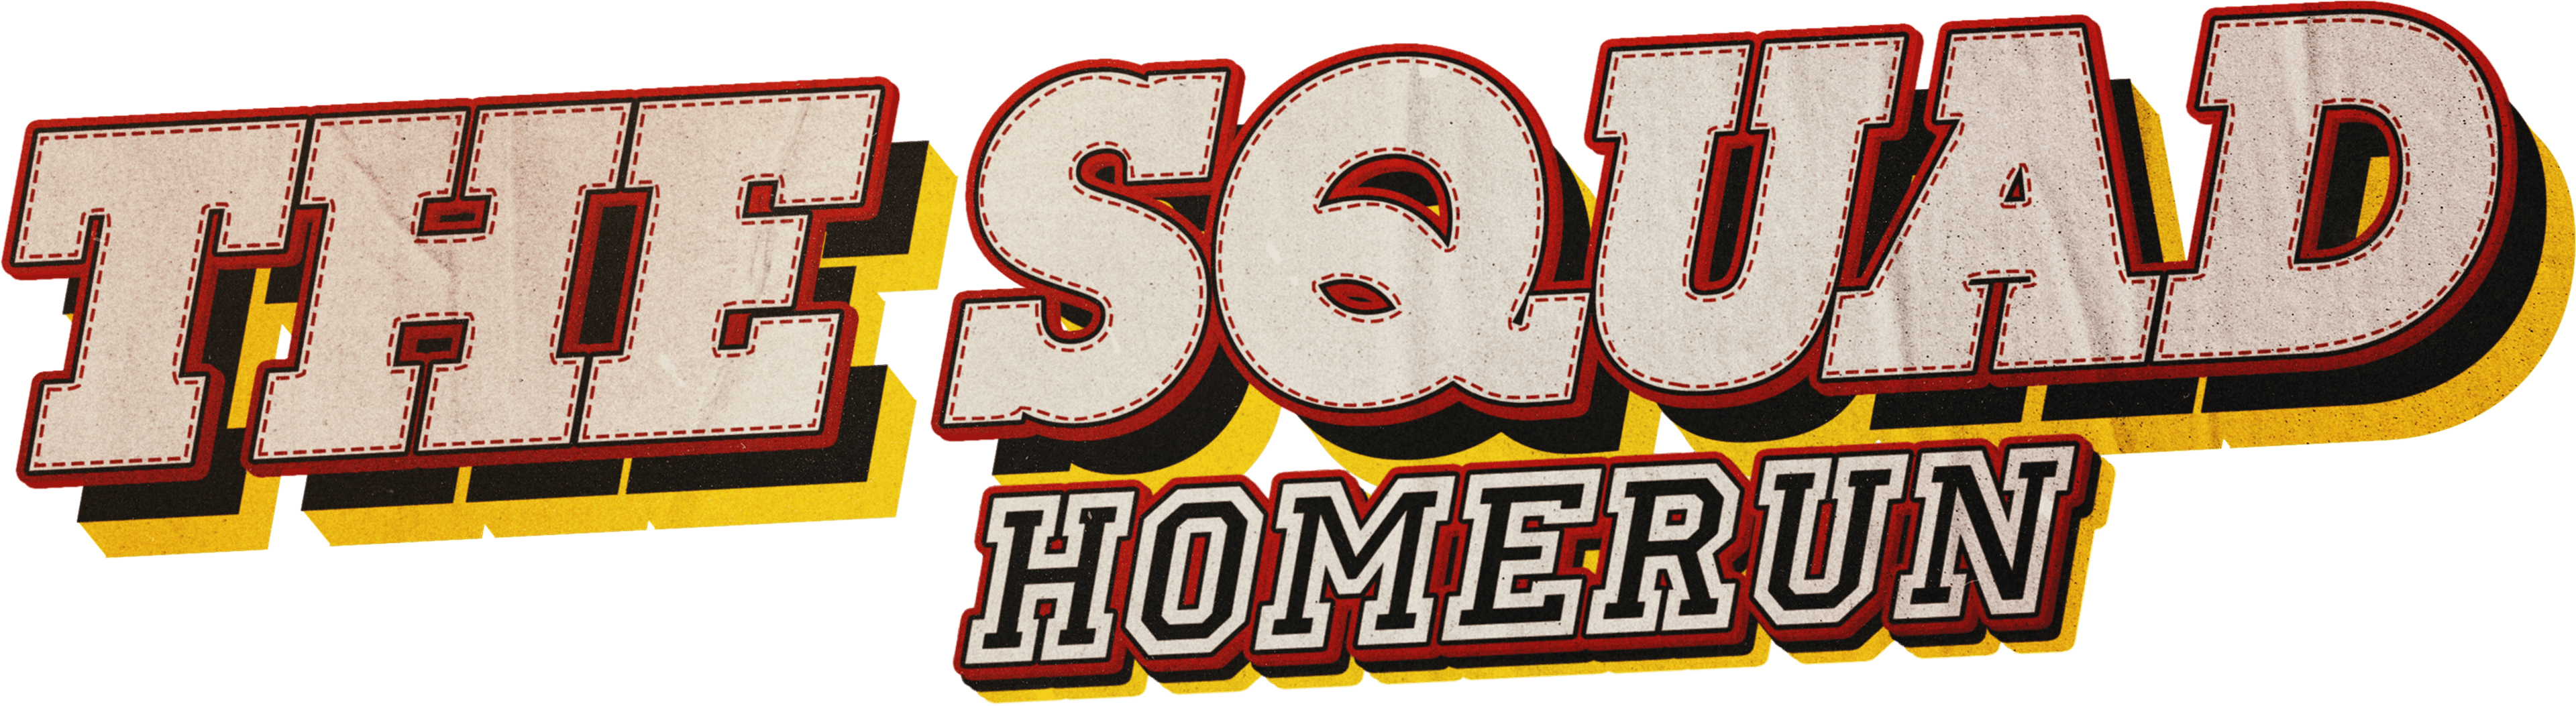 The Squad: Home Run logo